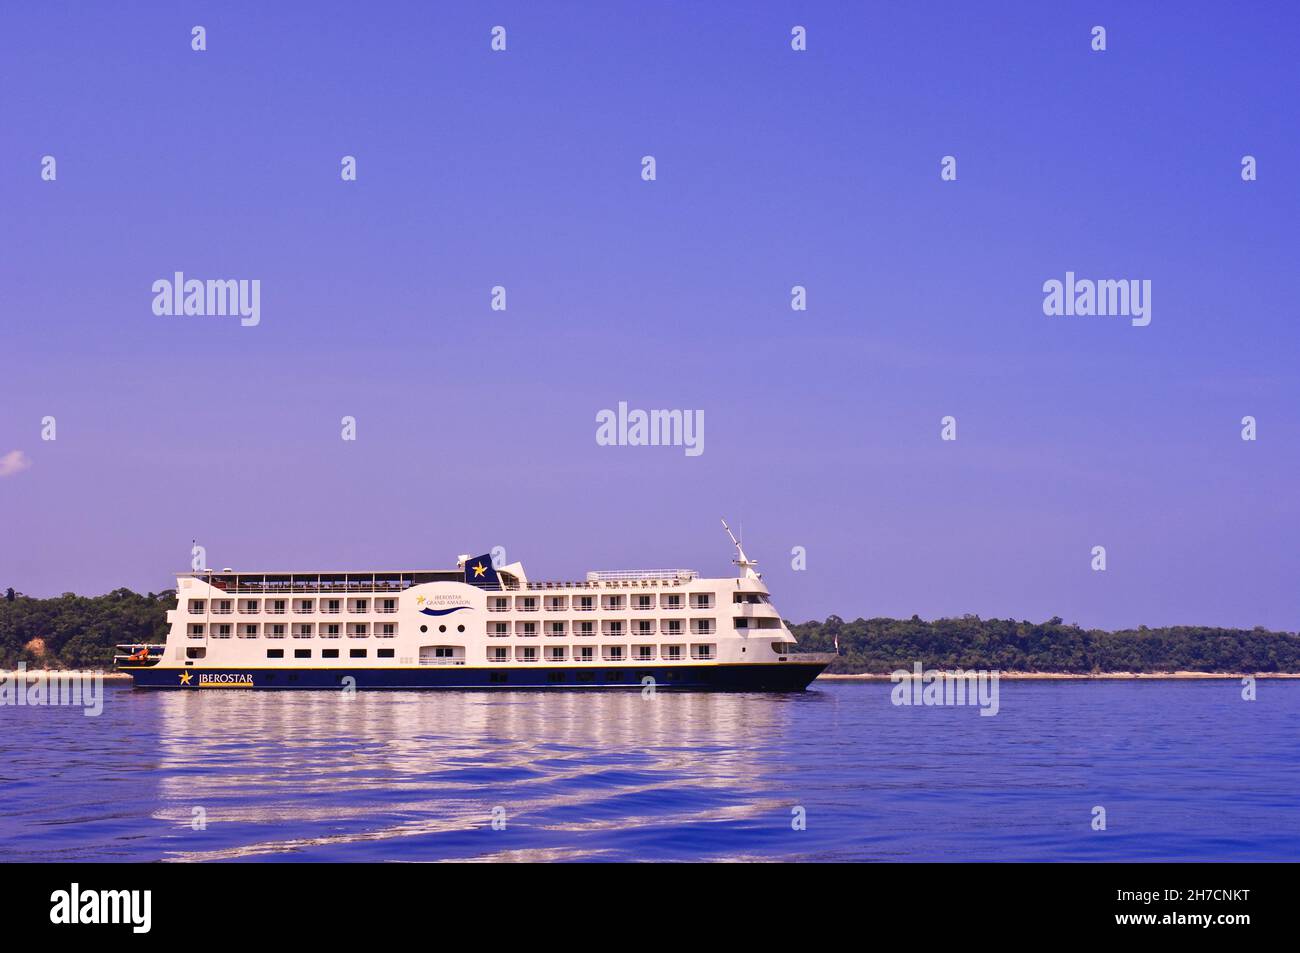 Iberostar Grand Amazon Cruise Ship on the Amazon River, Brazil, Amazon region Stock Photo